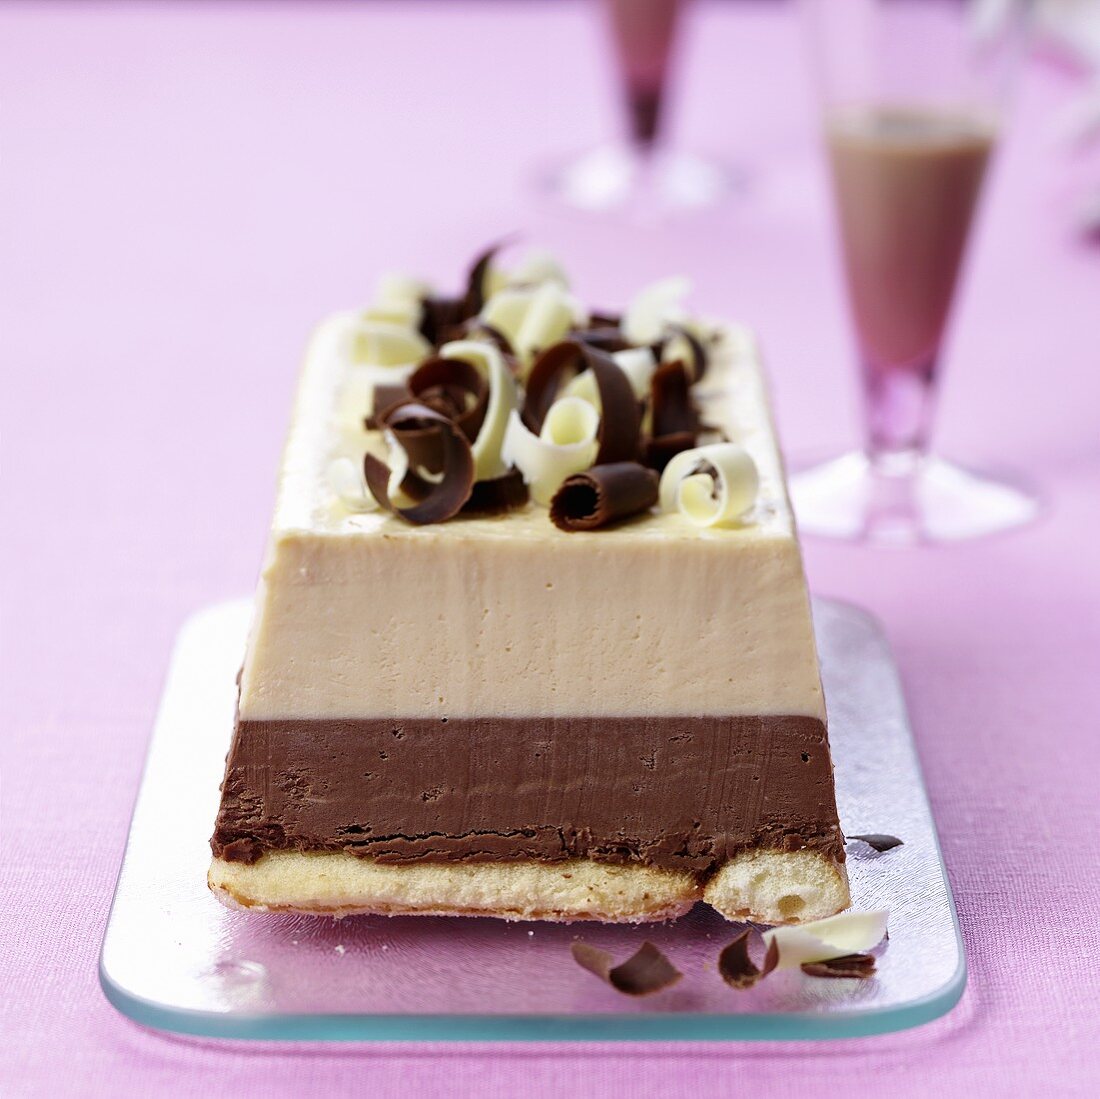 Chocolate ice cream cake with Baileys liqueur